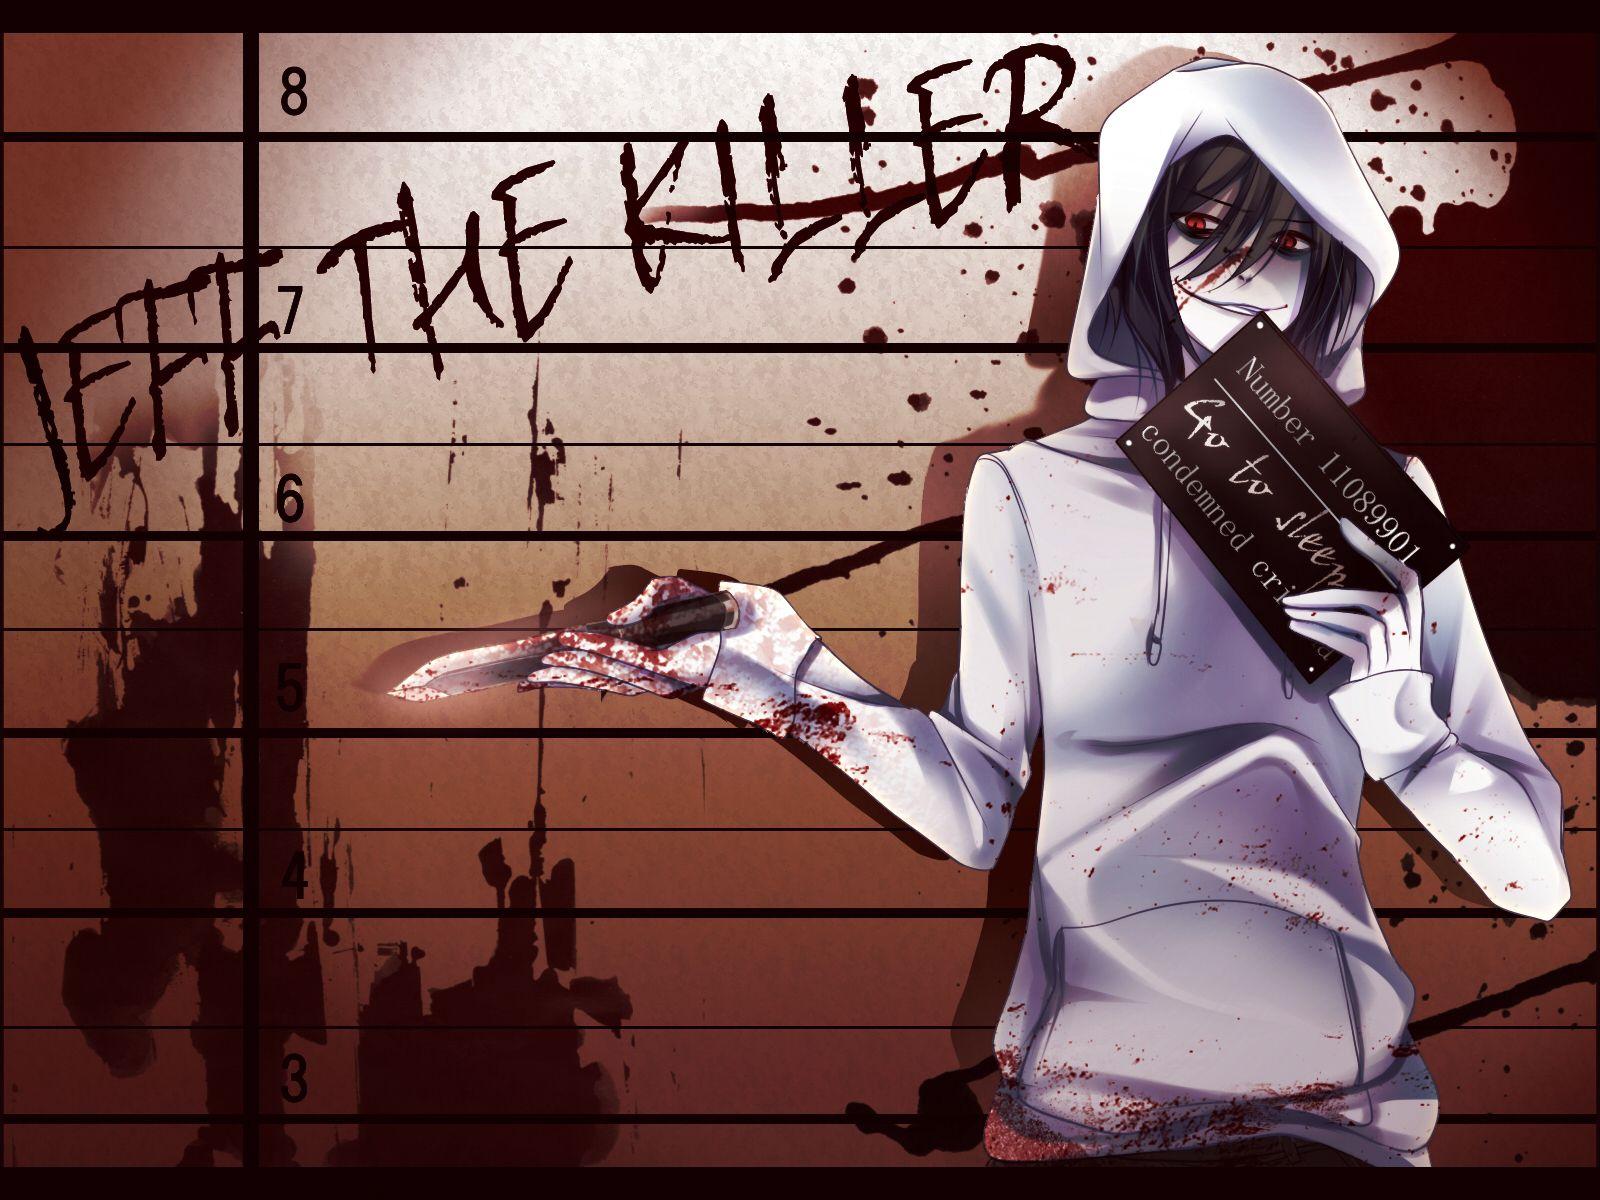 Jeff the killer anime wallpaper, 1748x1240, 835338